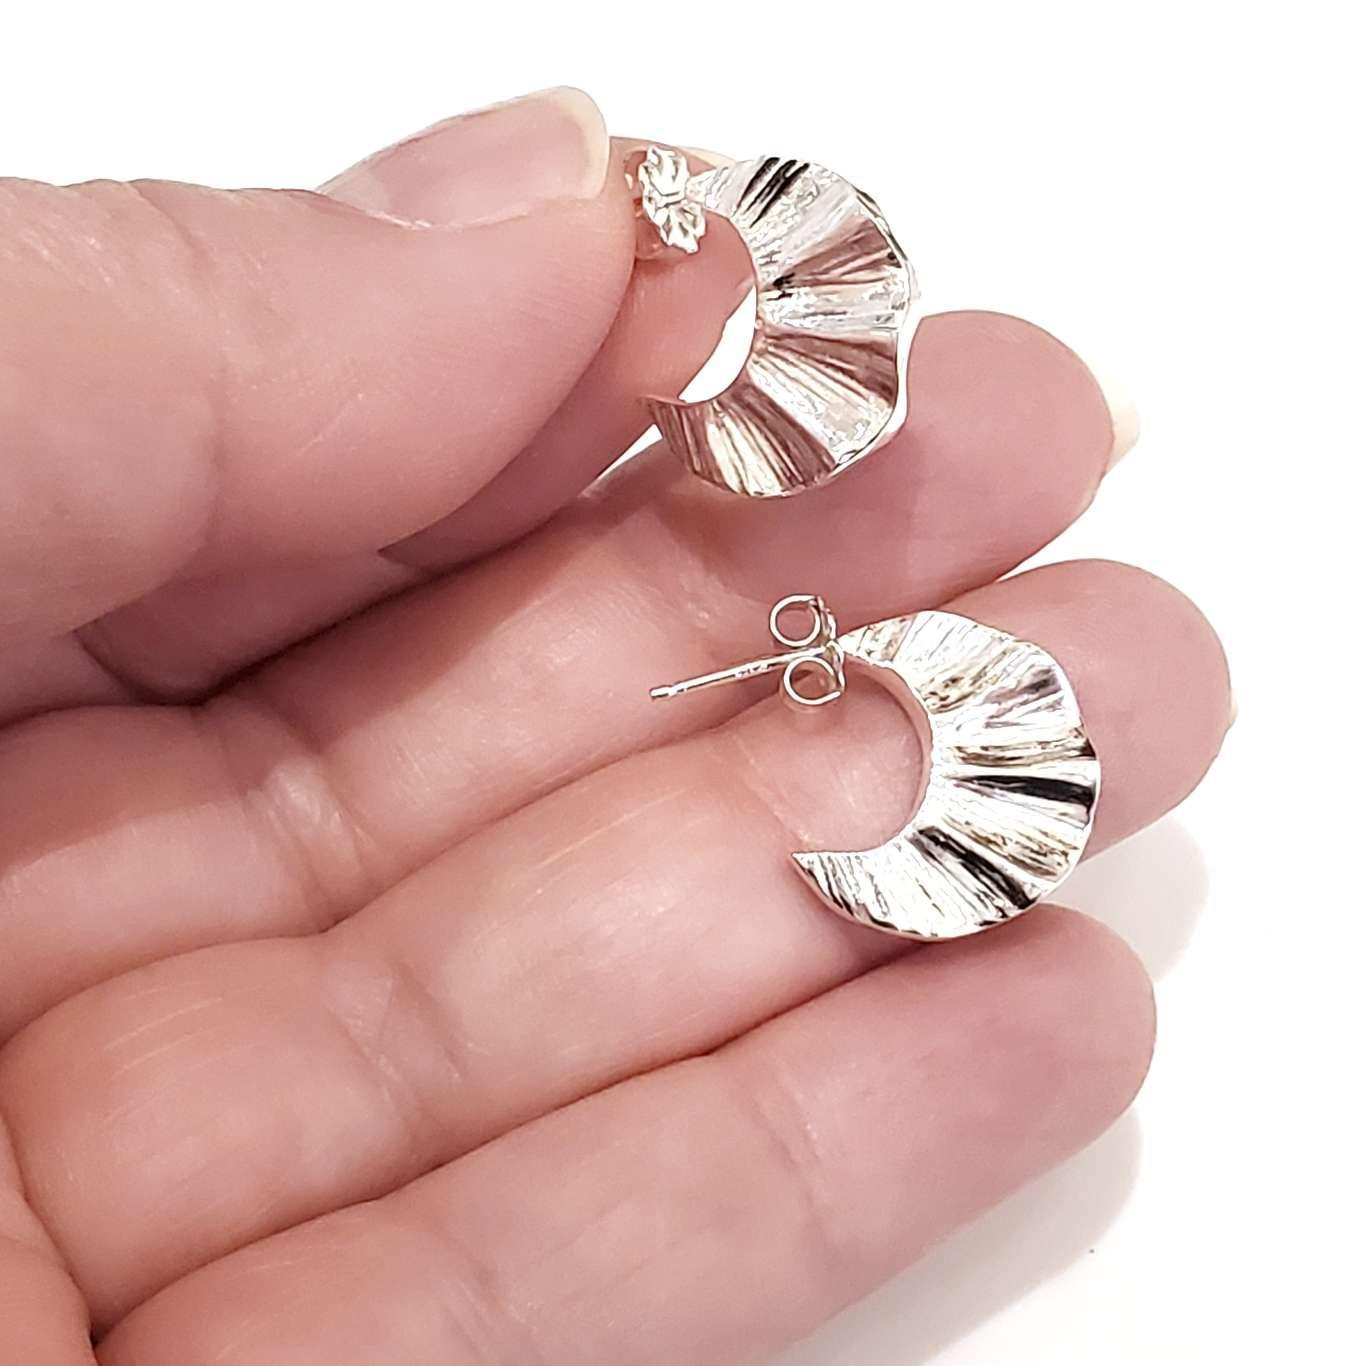 Earrings - Wave Hoops in Sterling Silver by Corey Egan